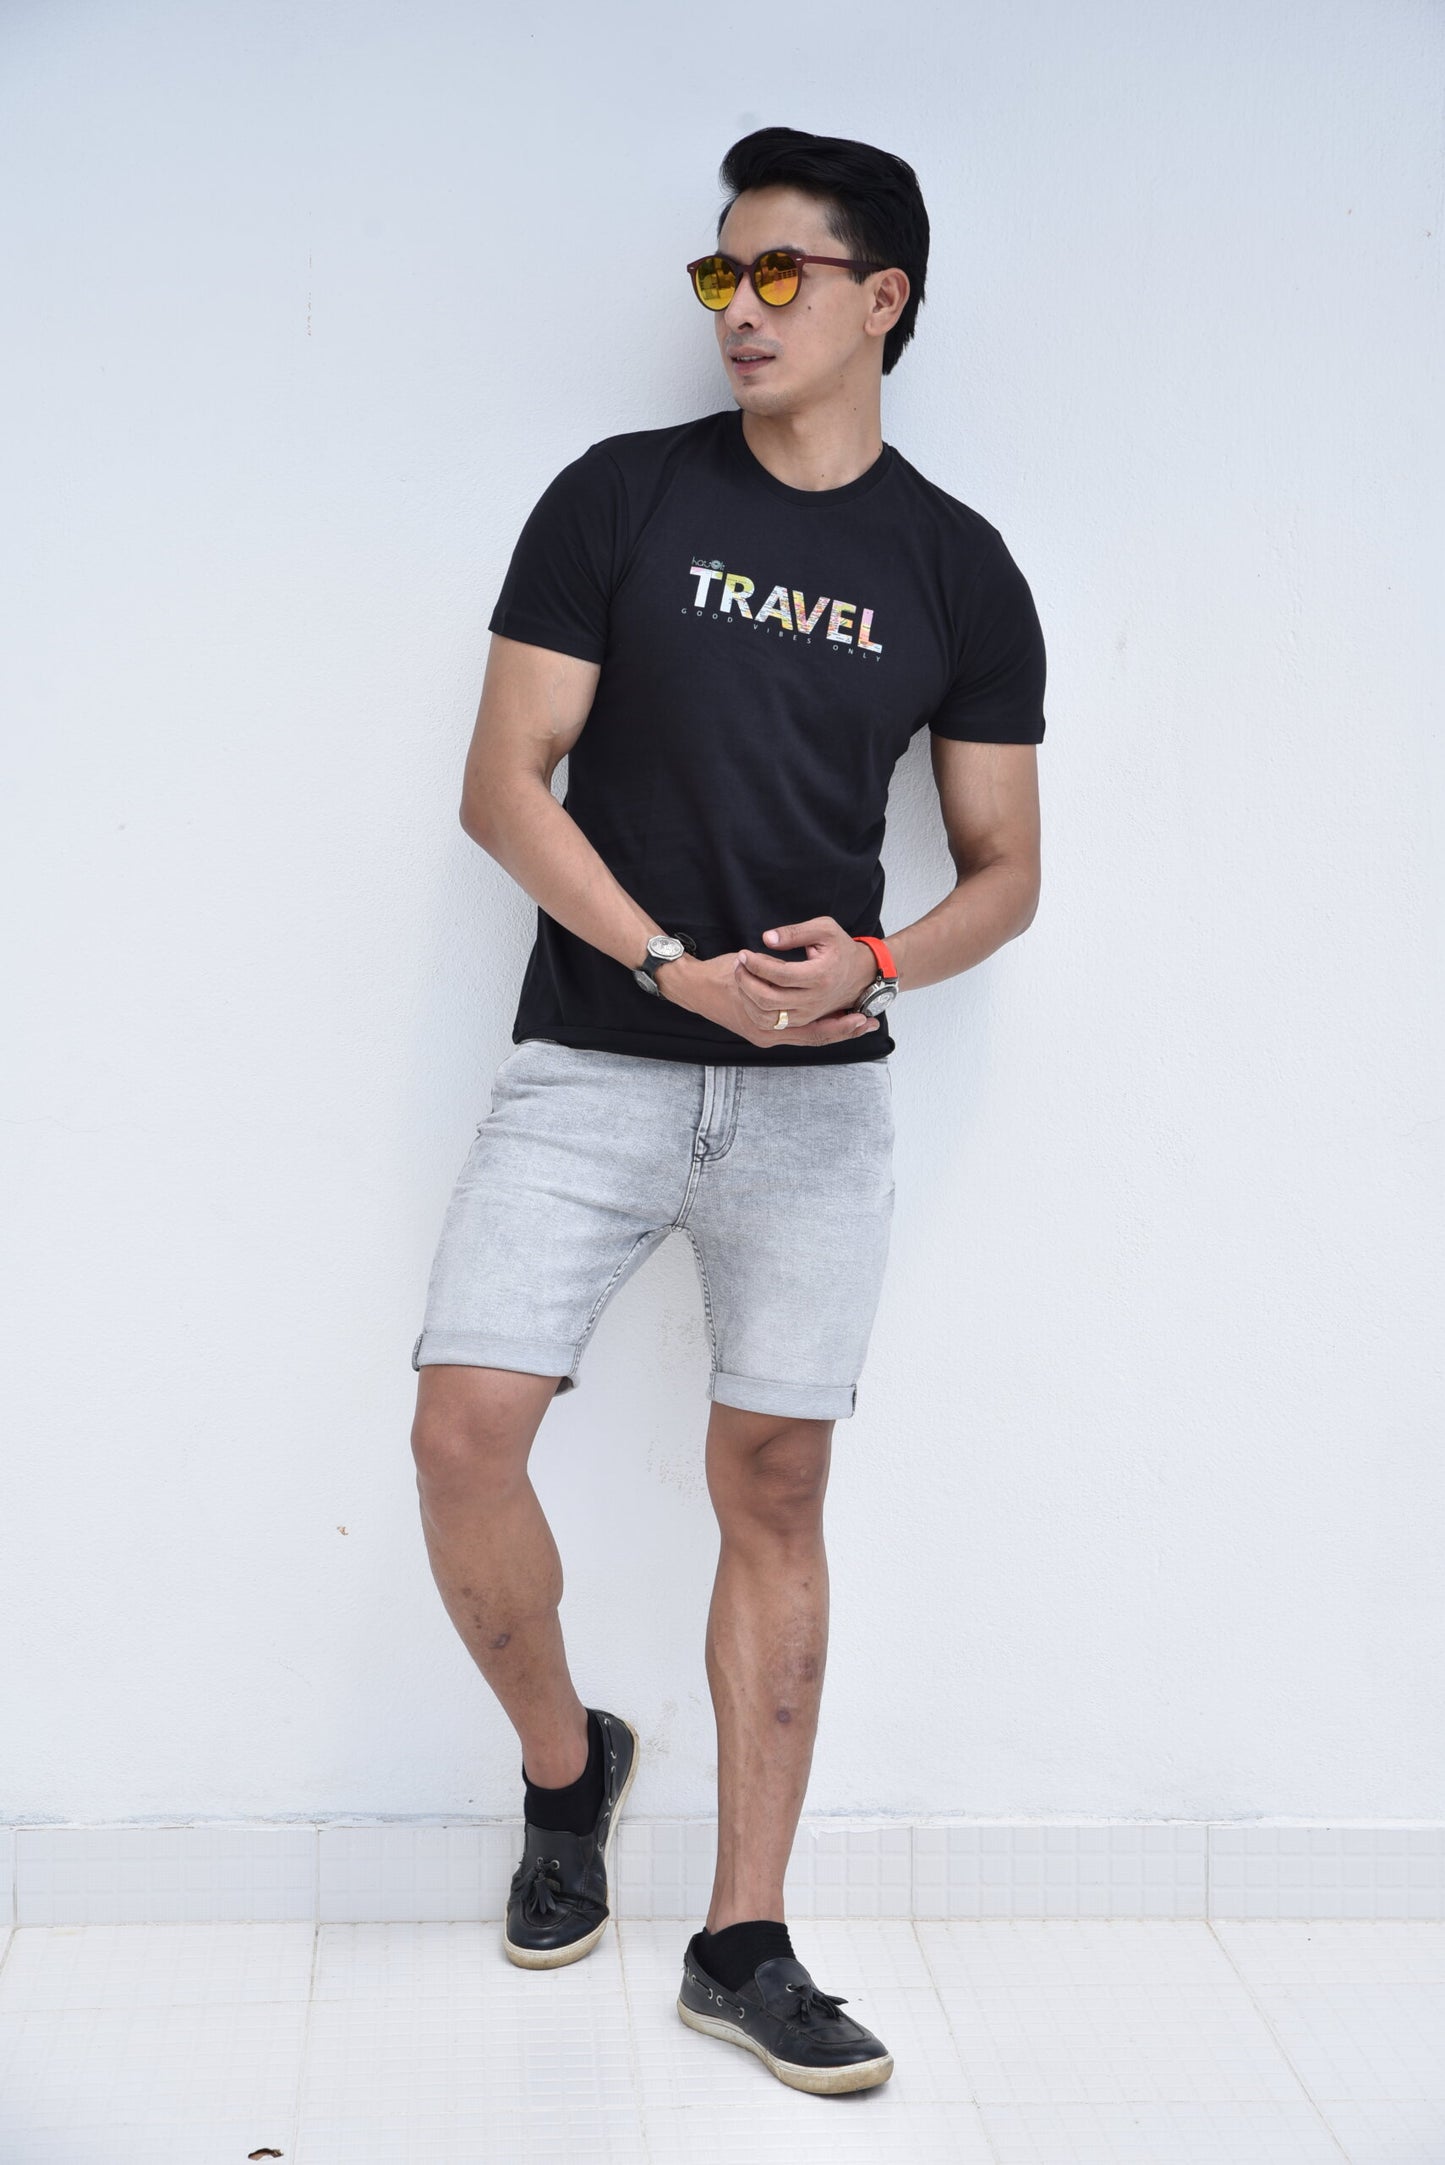 TRAVEL | PRINTED T-SHIRTS FOR MEN | MEN T-SHIRTS